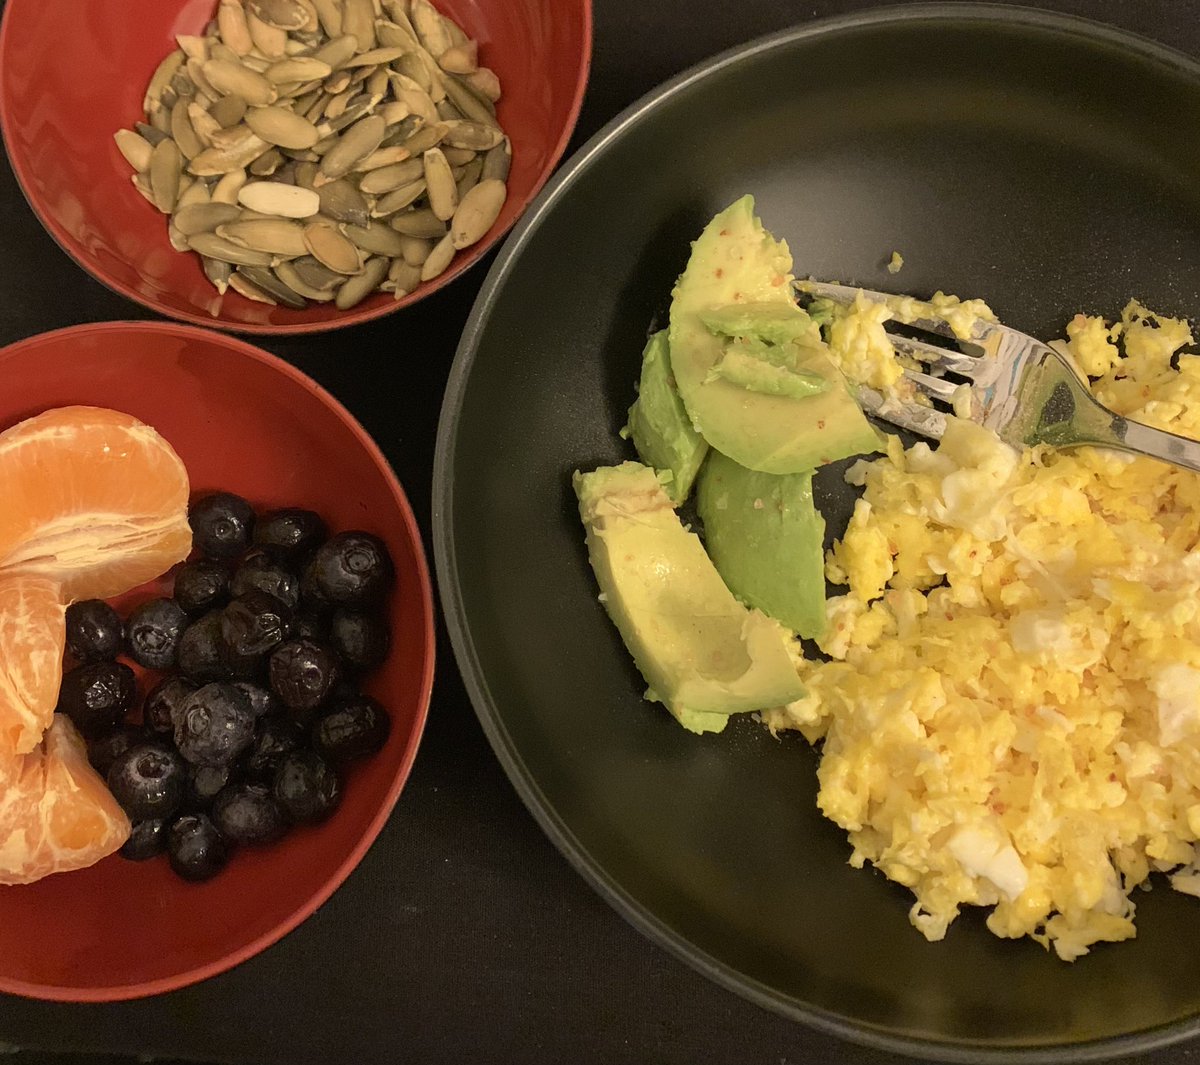 Breakfast anyone? 

#healthyfood #breakfasttime #yummyfood #fuits #seeds #scrambledeggs #avocadolover #mandarine #blueberriesforever